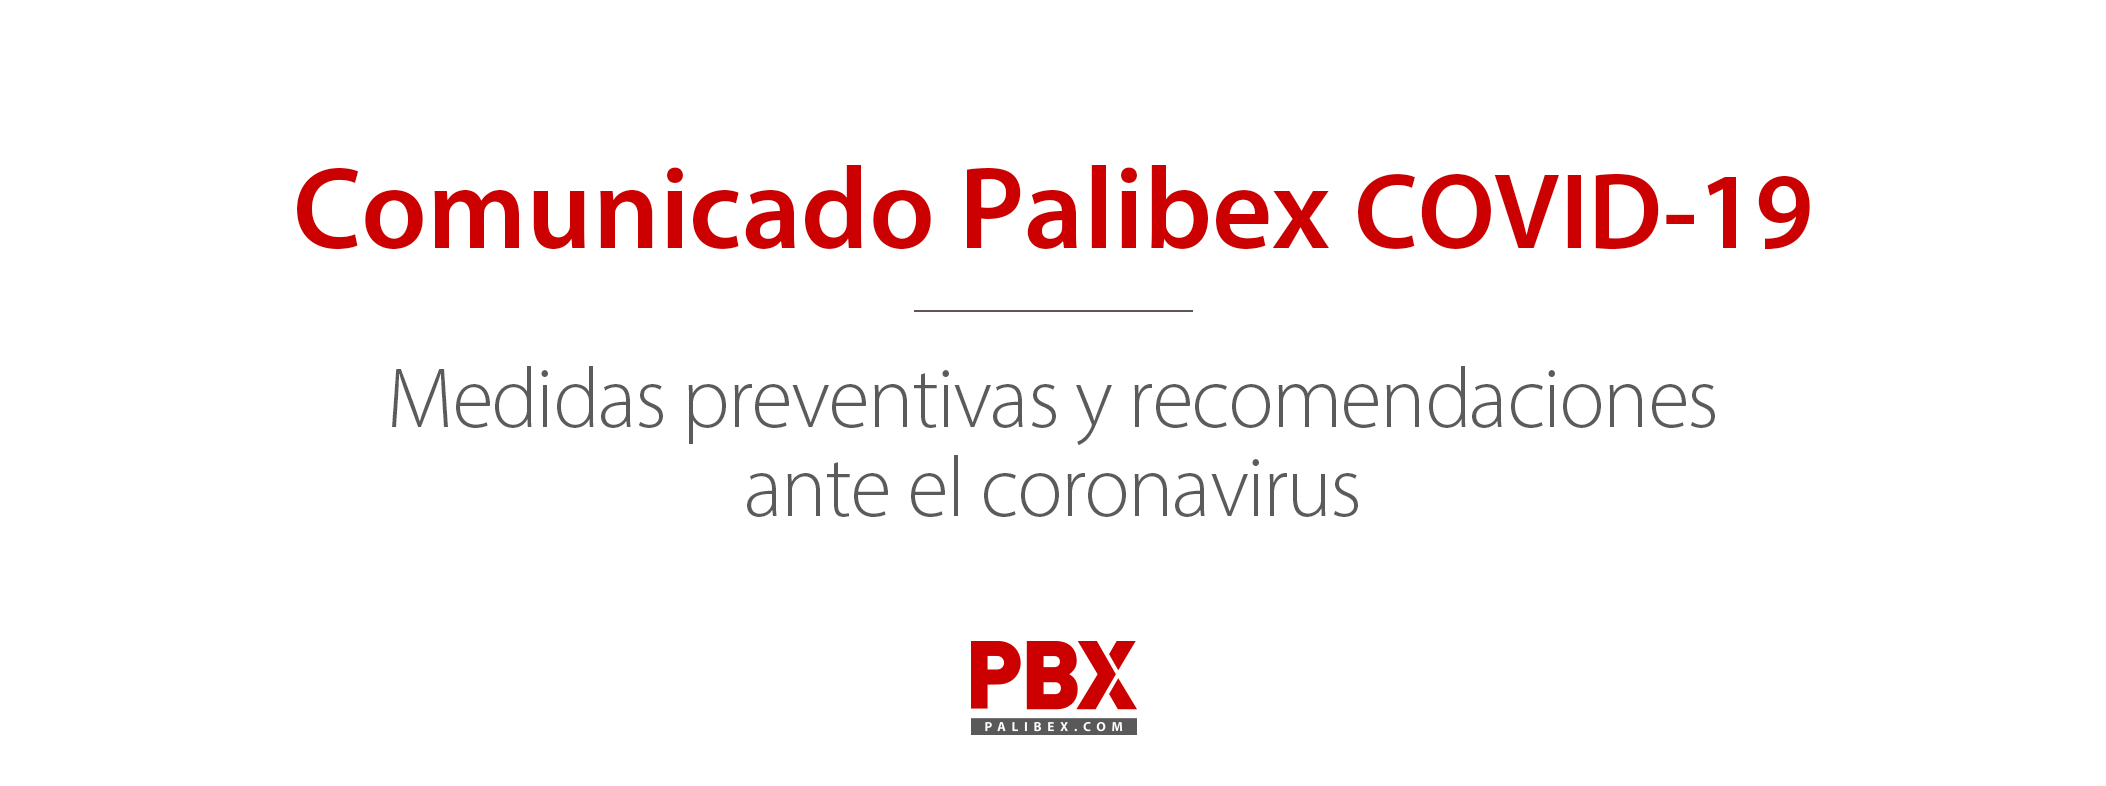 Comunicado Corona virus Palibex